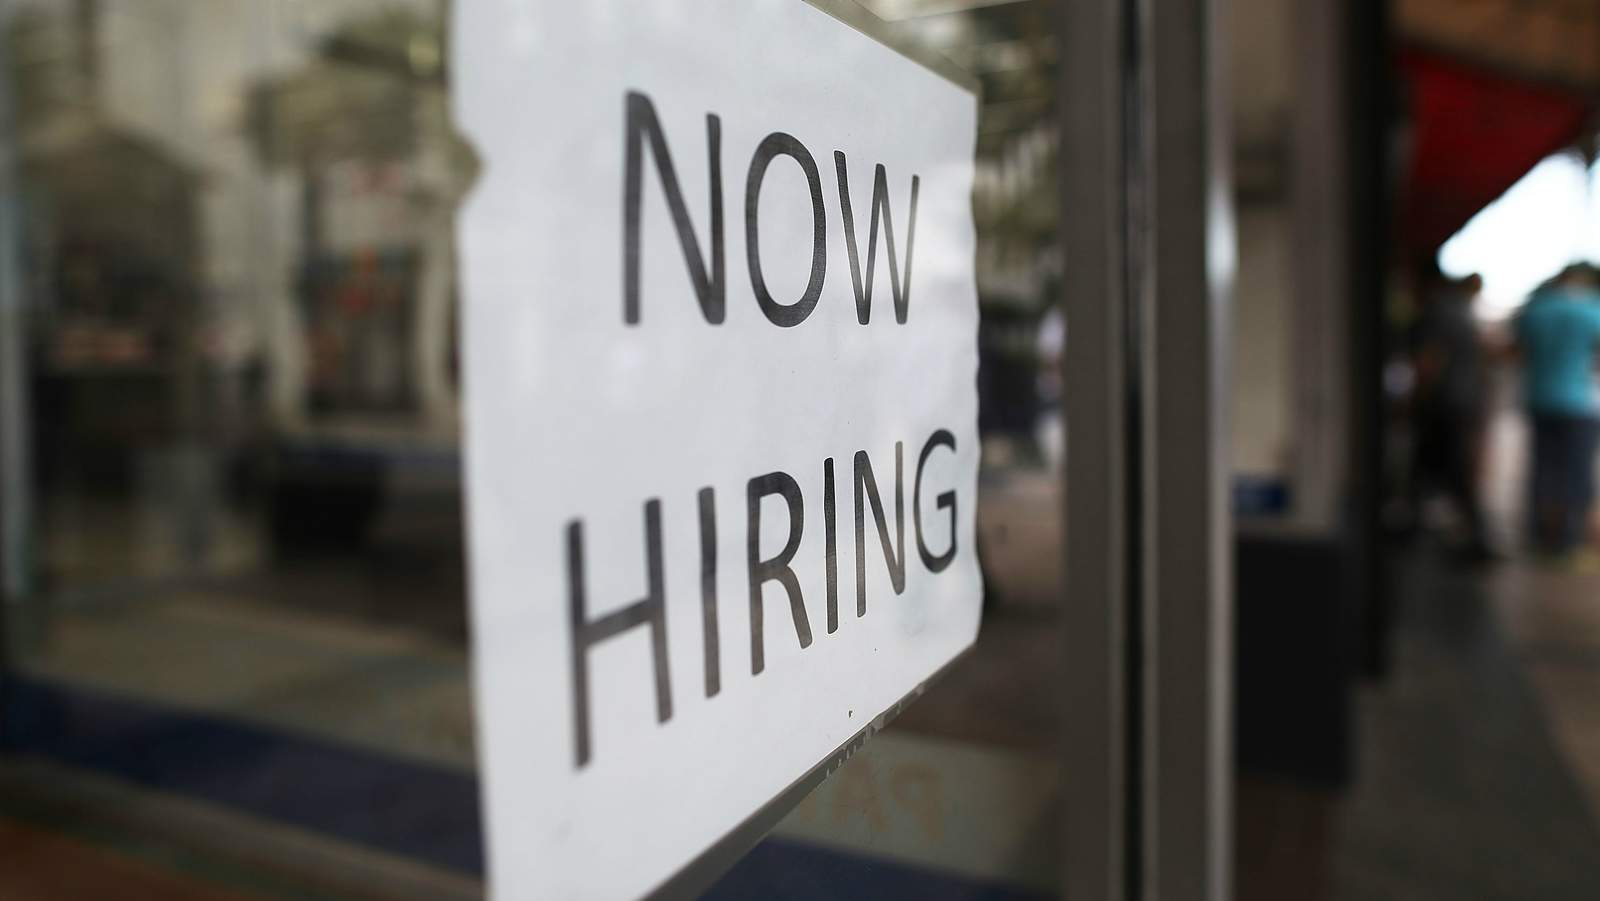 Need a job? More than 1,300 jobs at City of Houston virtual employment fair